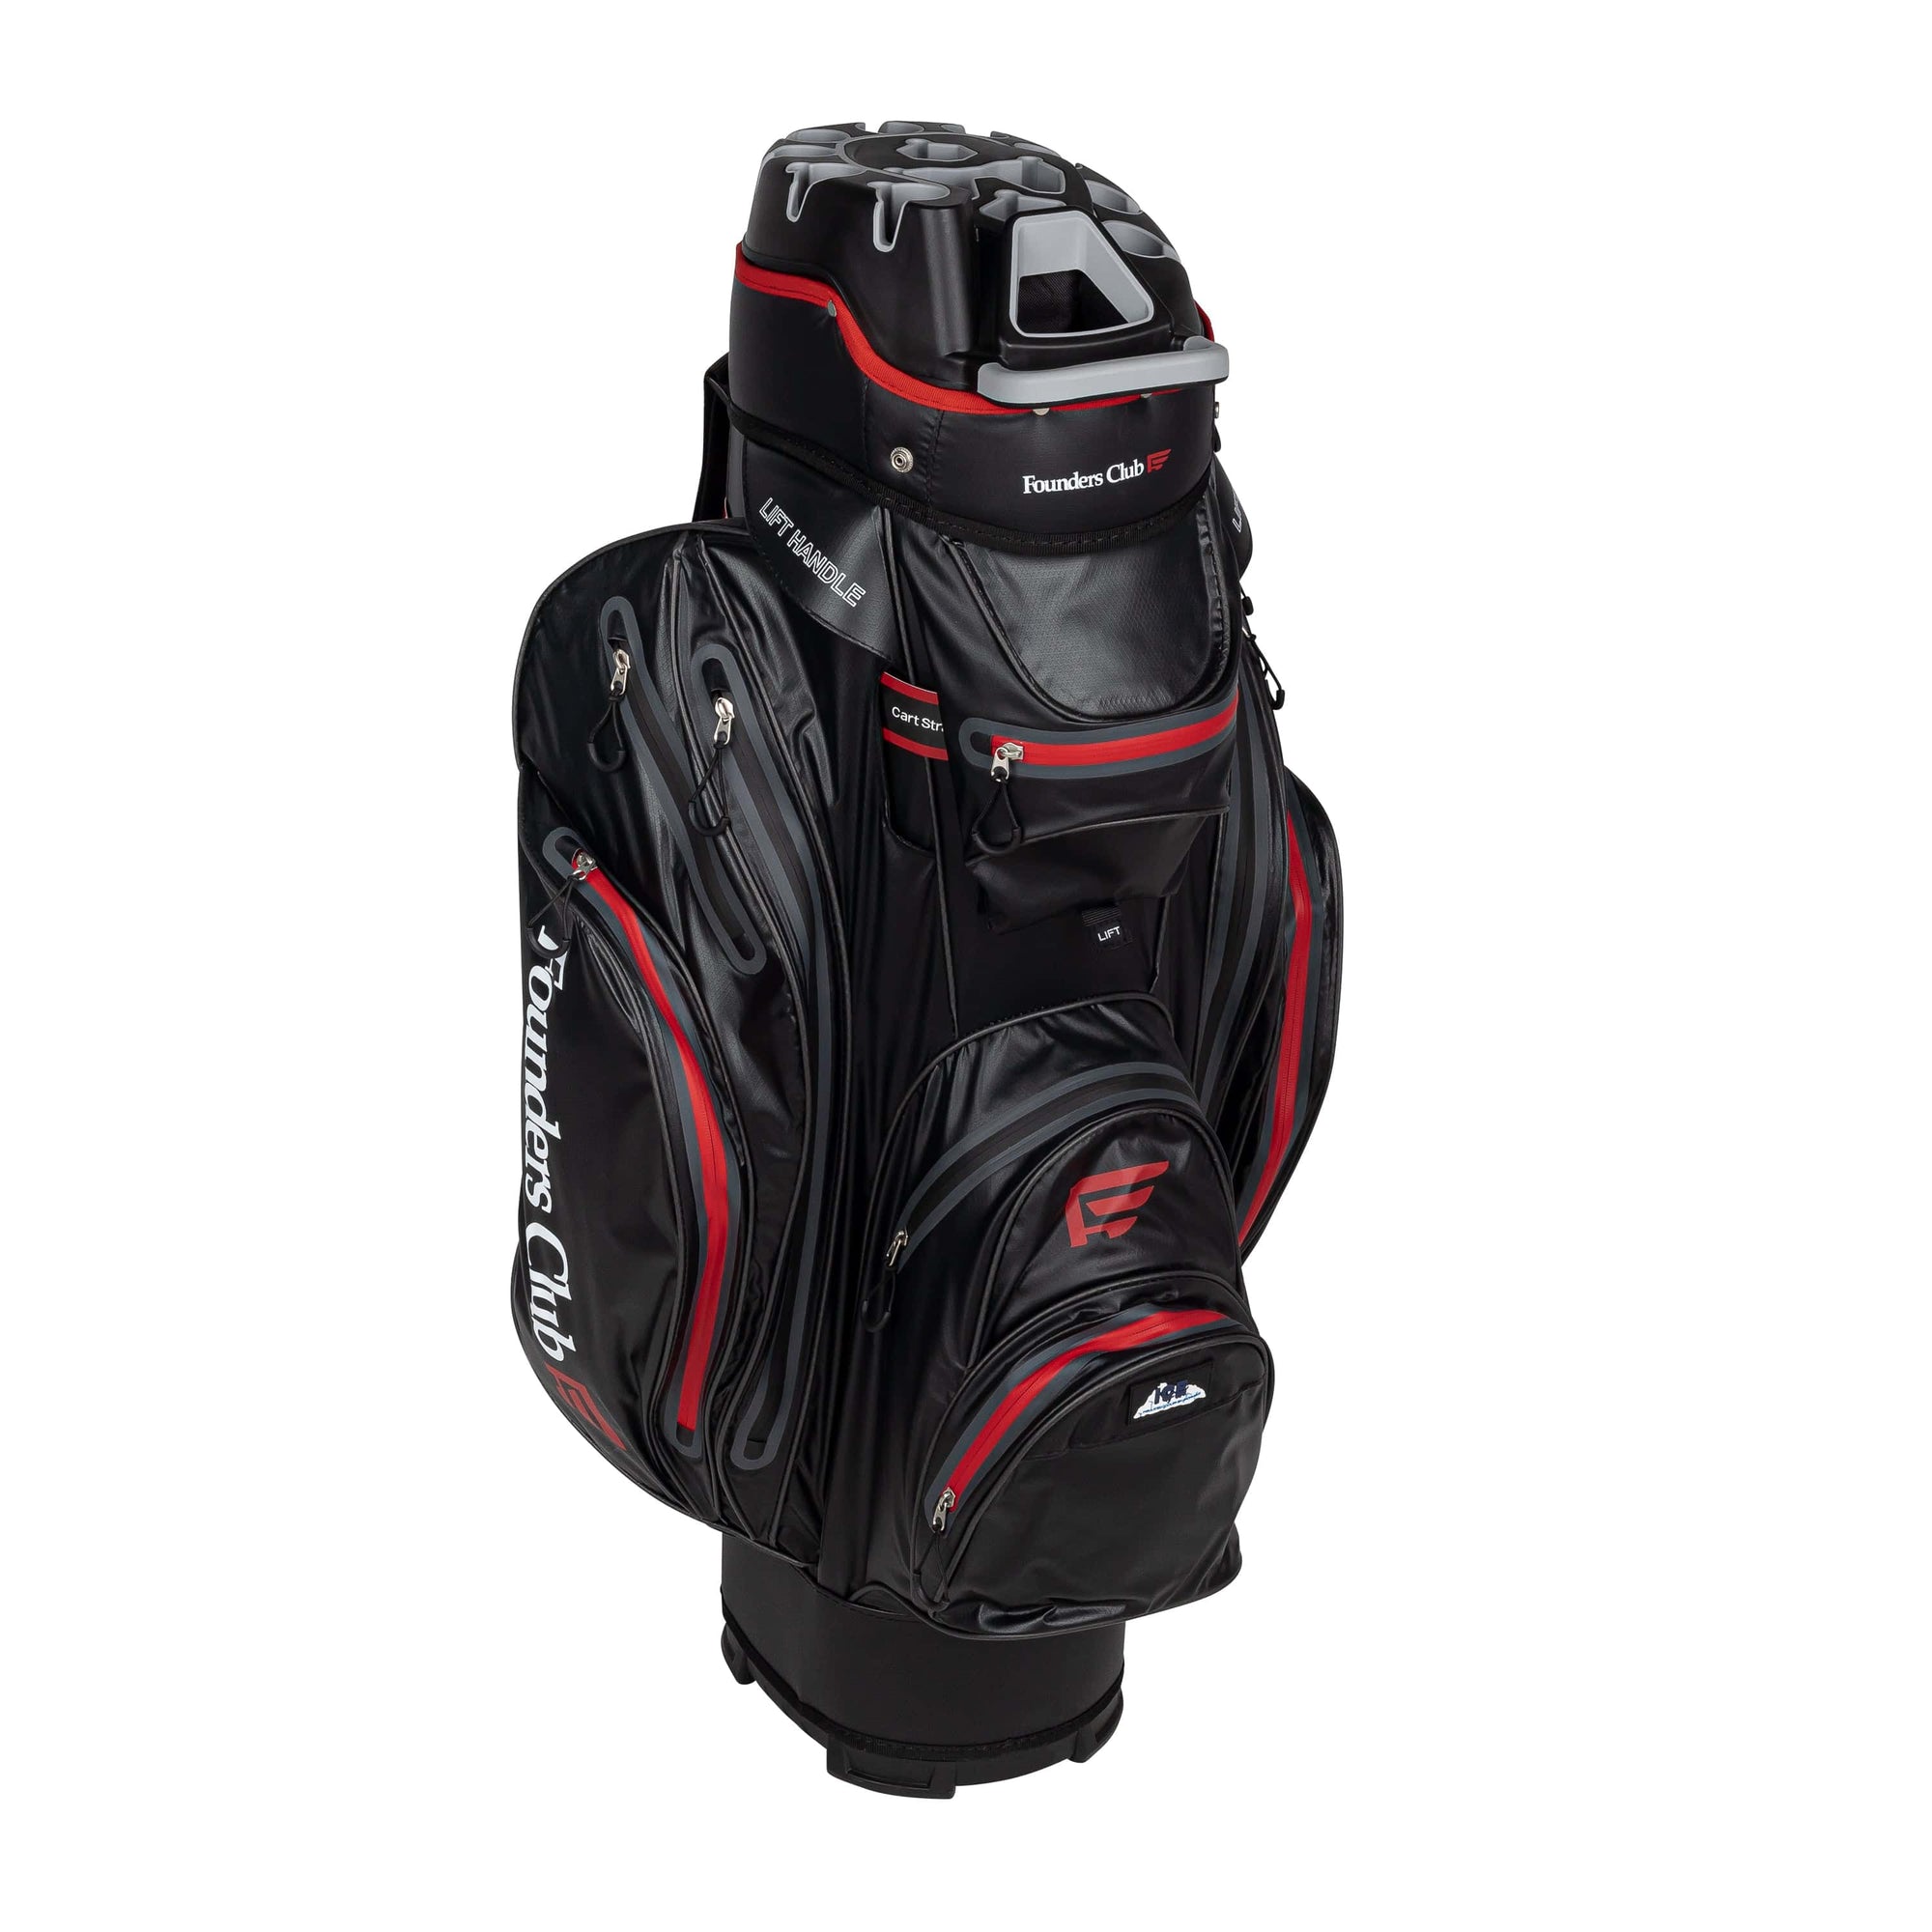 Founders Club Premium Organizer 14 Way Golf Cart Bag - Black/Red Water